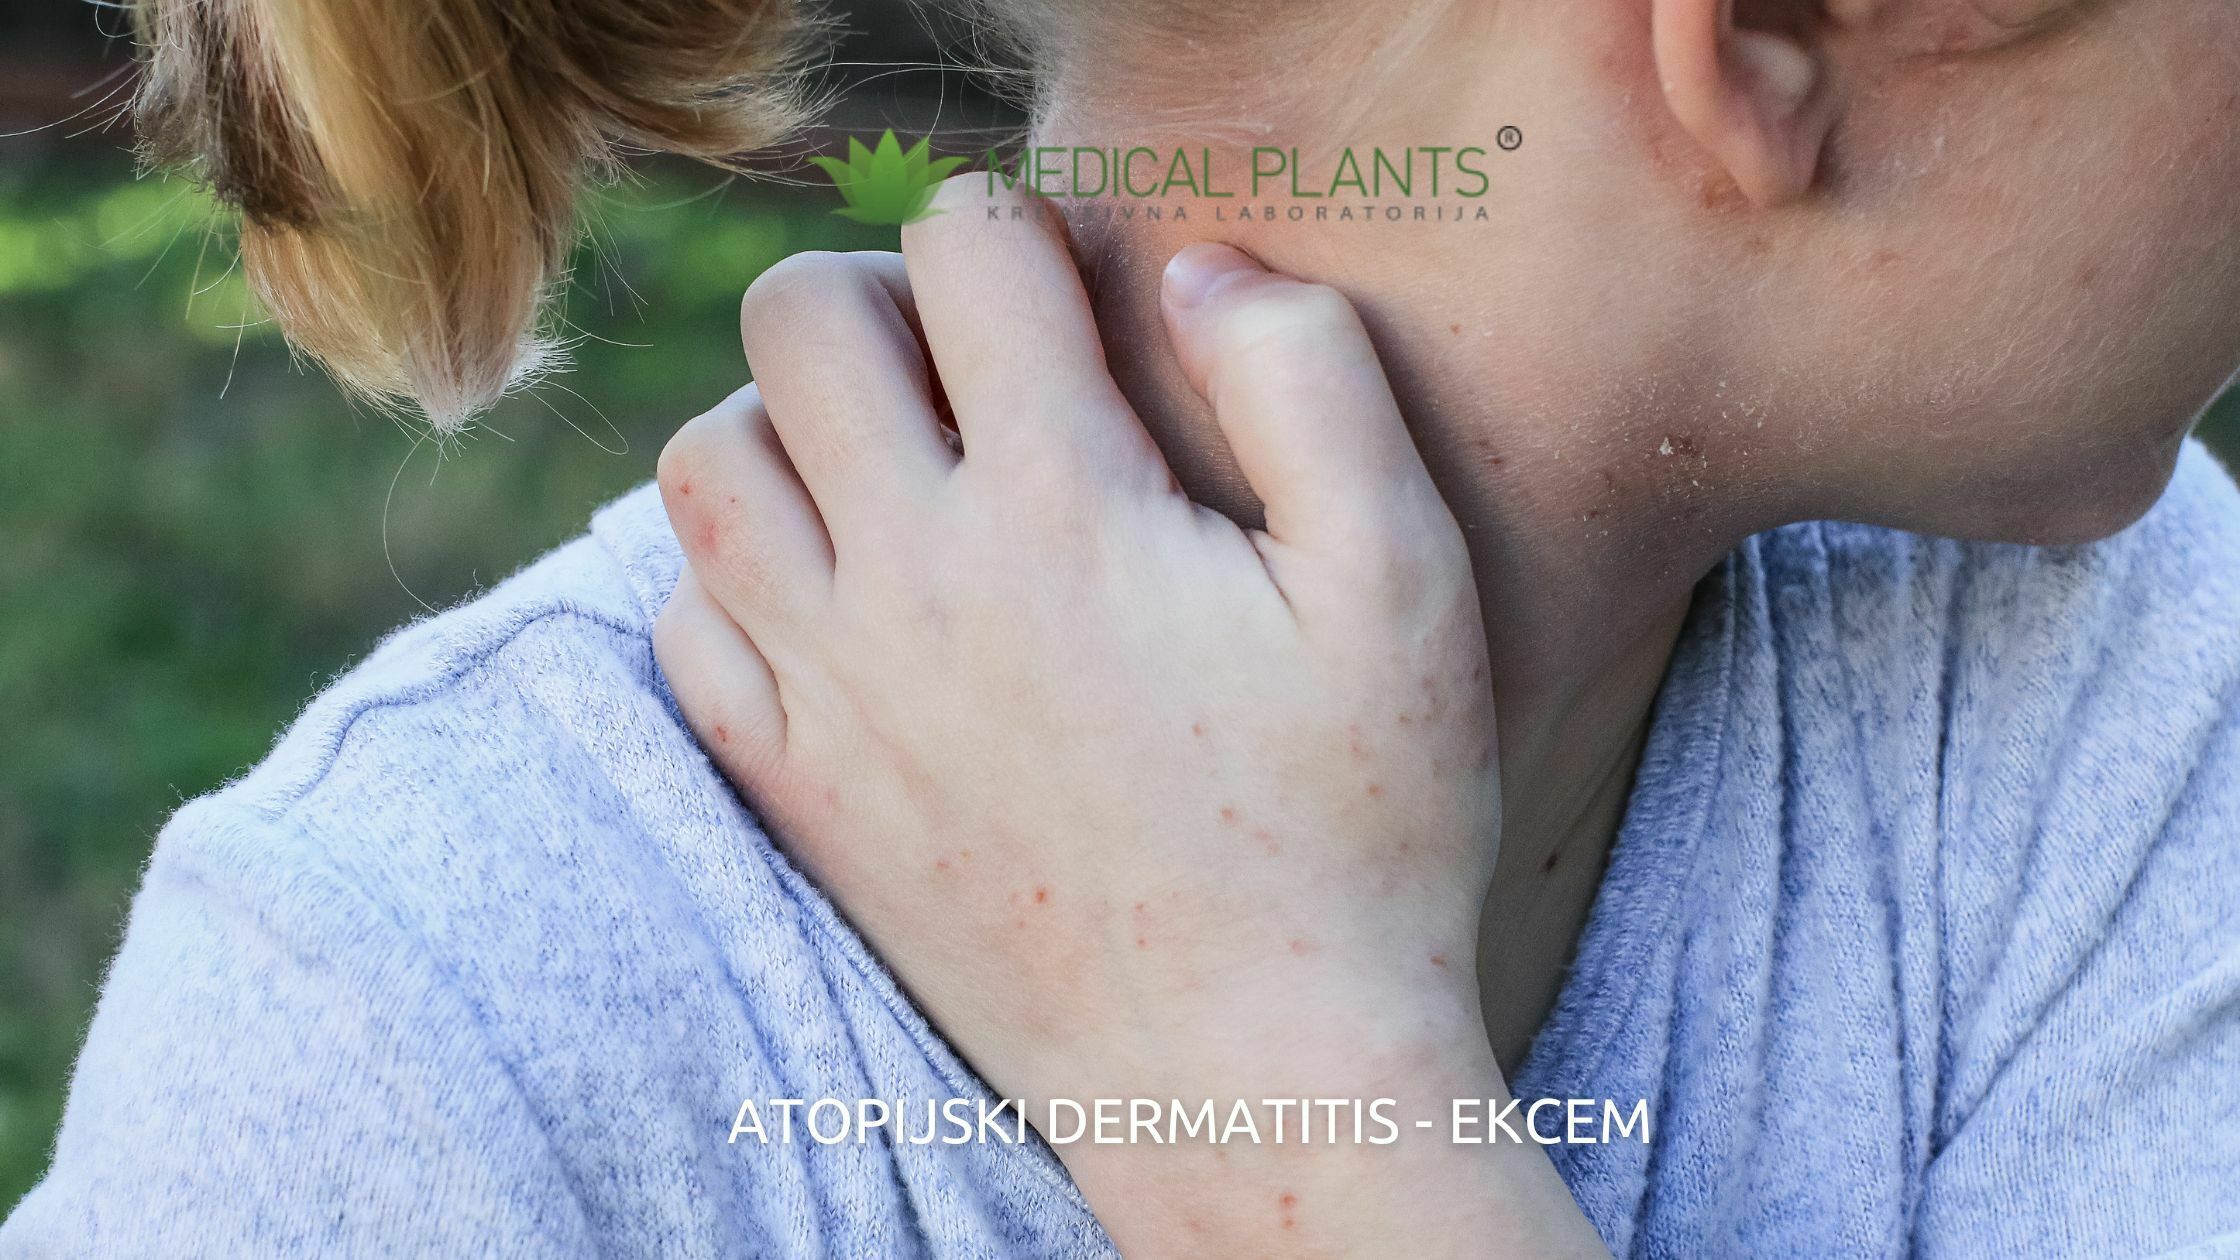 medic plants - atopijski dermatitis - ekcem